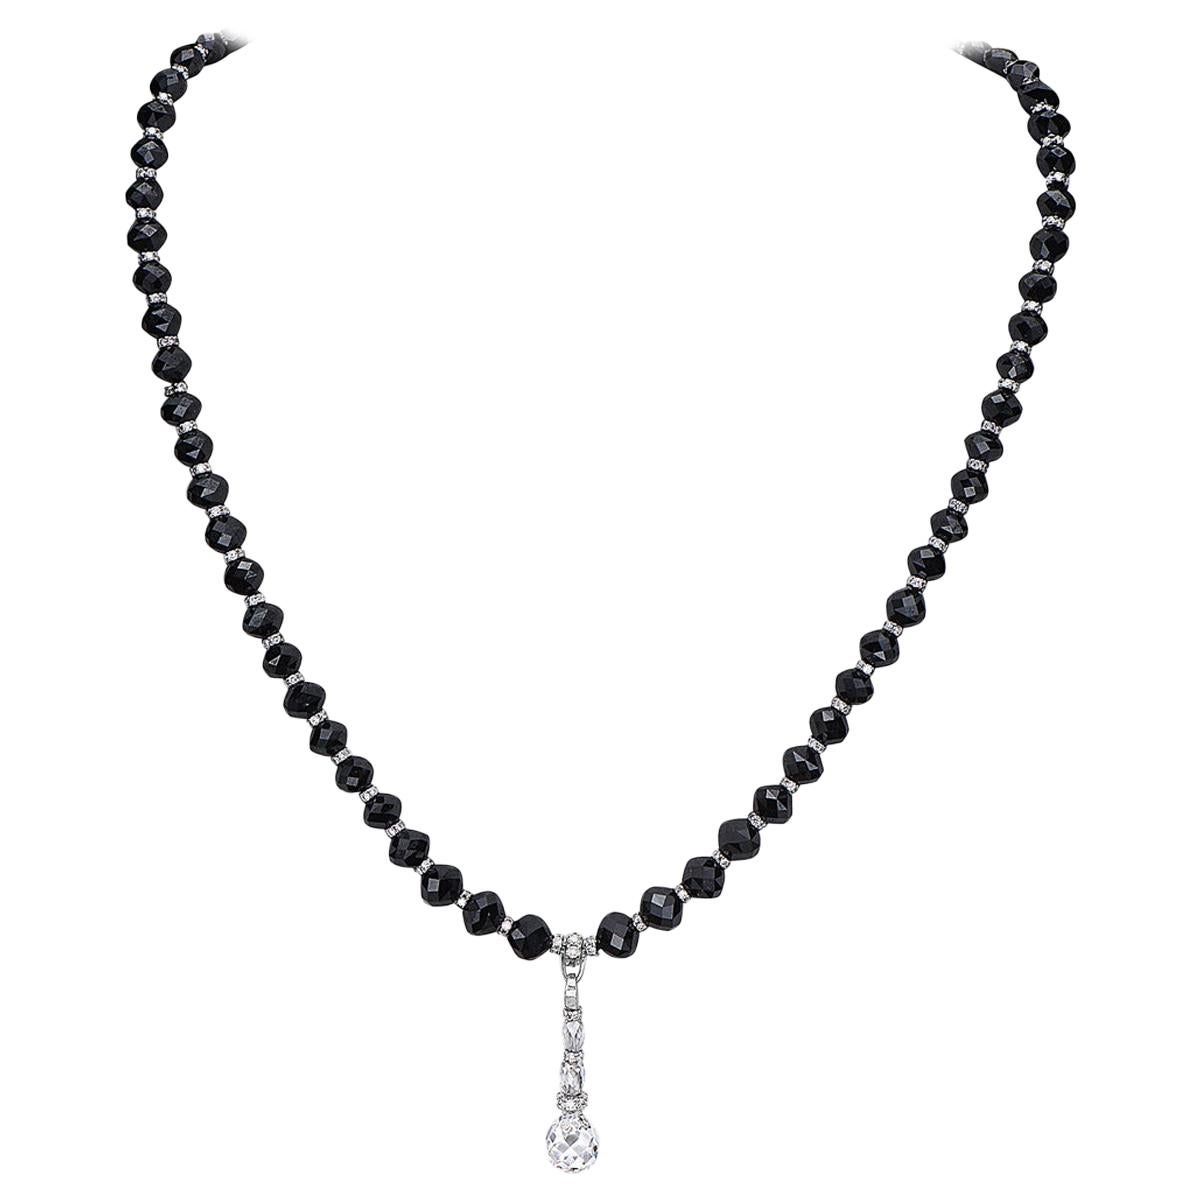 "Art Deco Style" Black and White Briolette Diamond Pendant Necklace